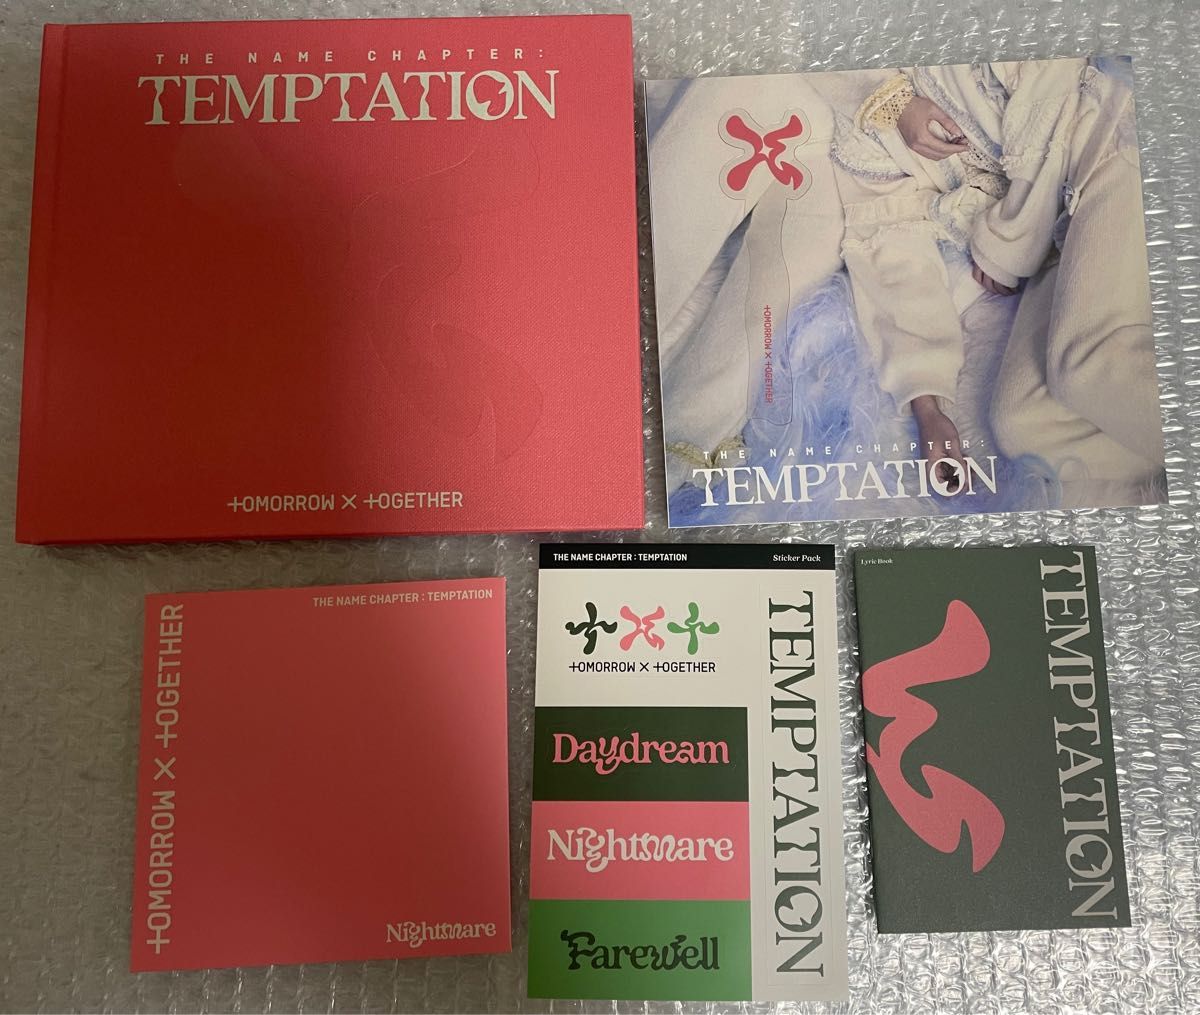 TXT tomorrow x together TEMPTATION 3形態セット 新品未使用 ランダムポストカード付き(先着)